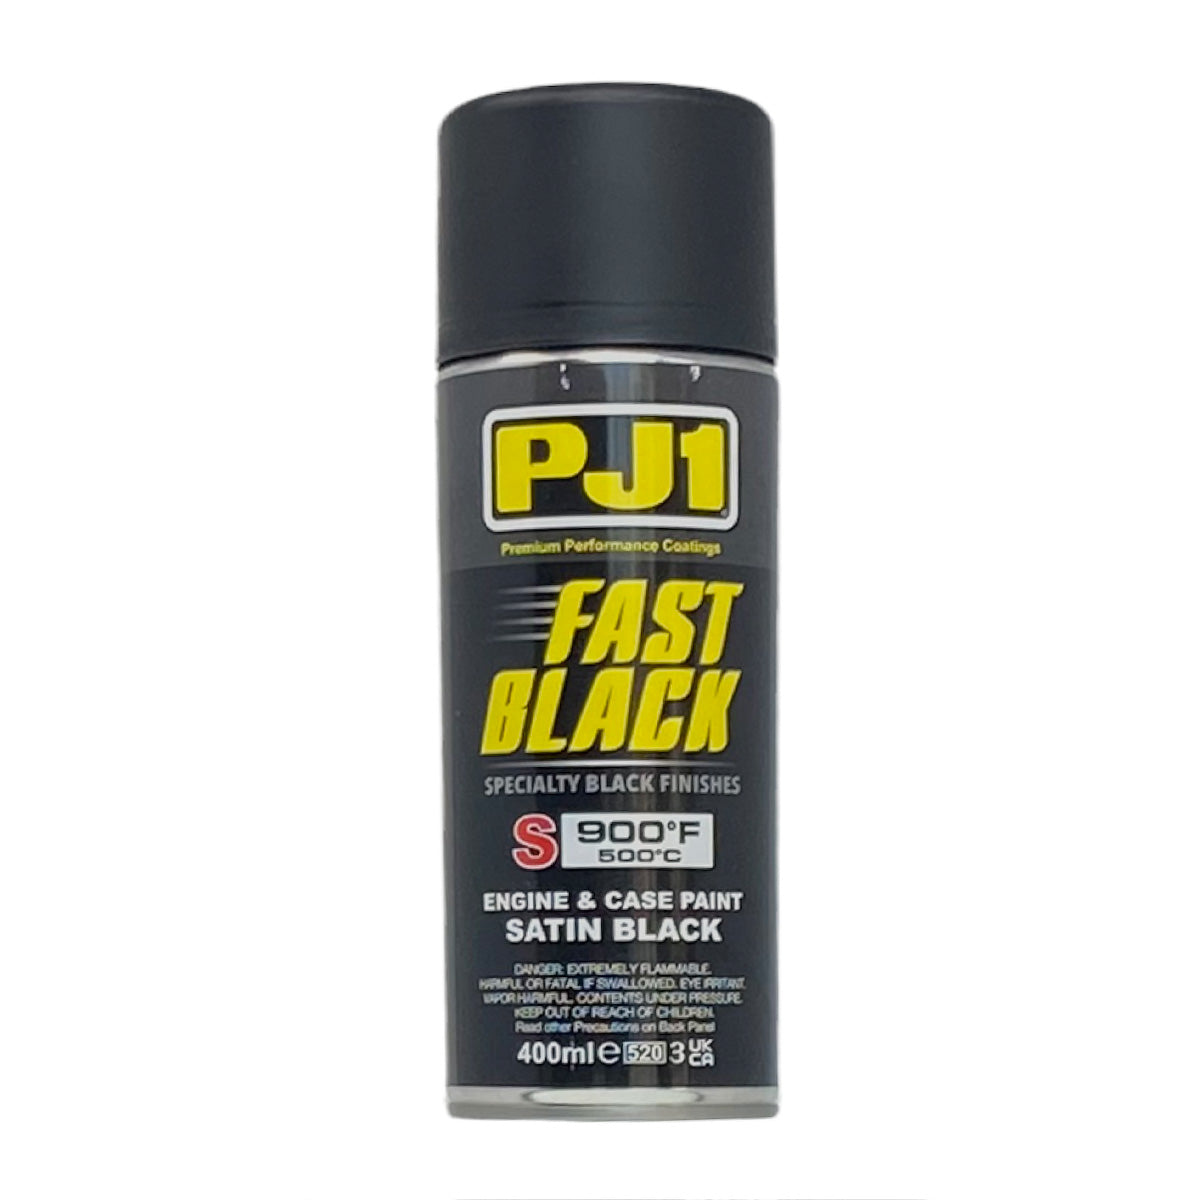 PJ1 Fast Black Satin Paint